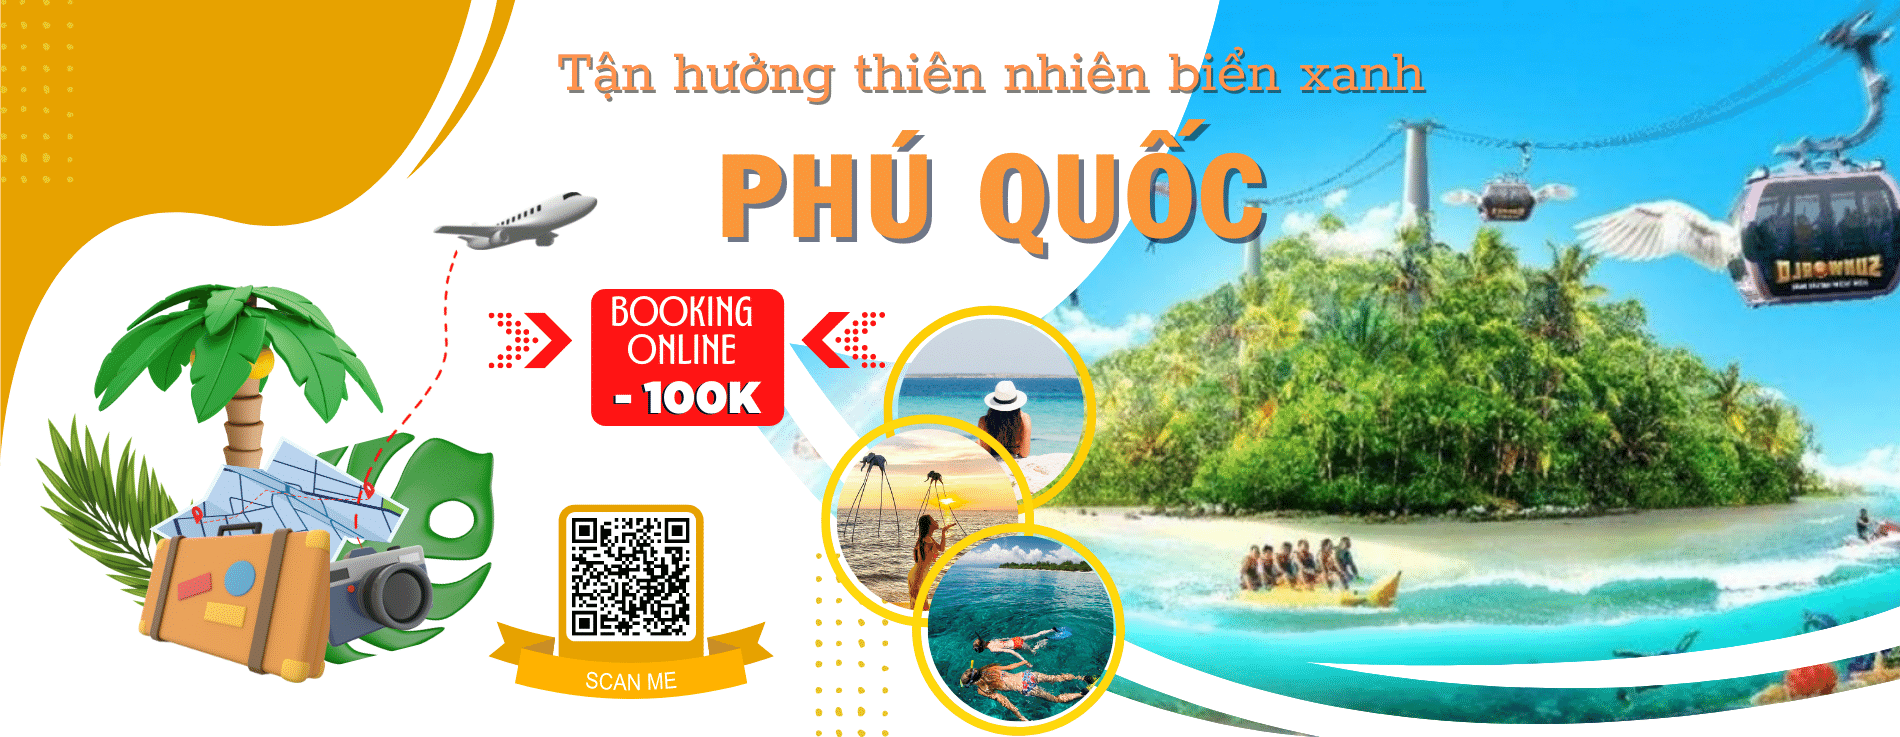 Banner Tour Phú Quốc